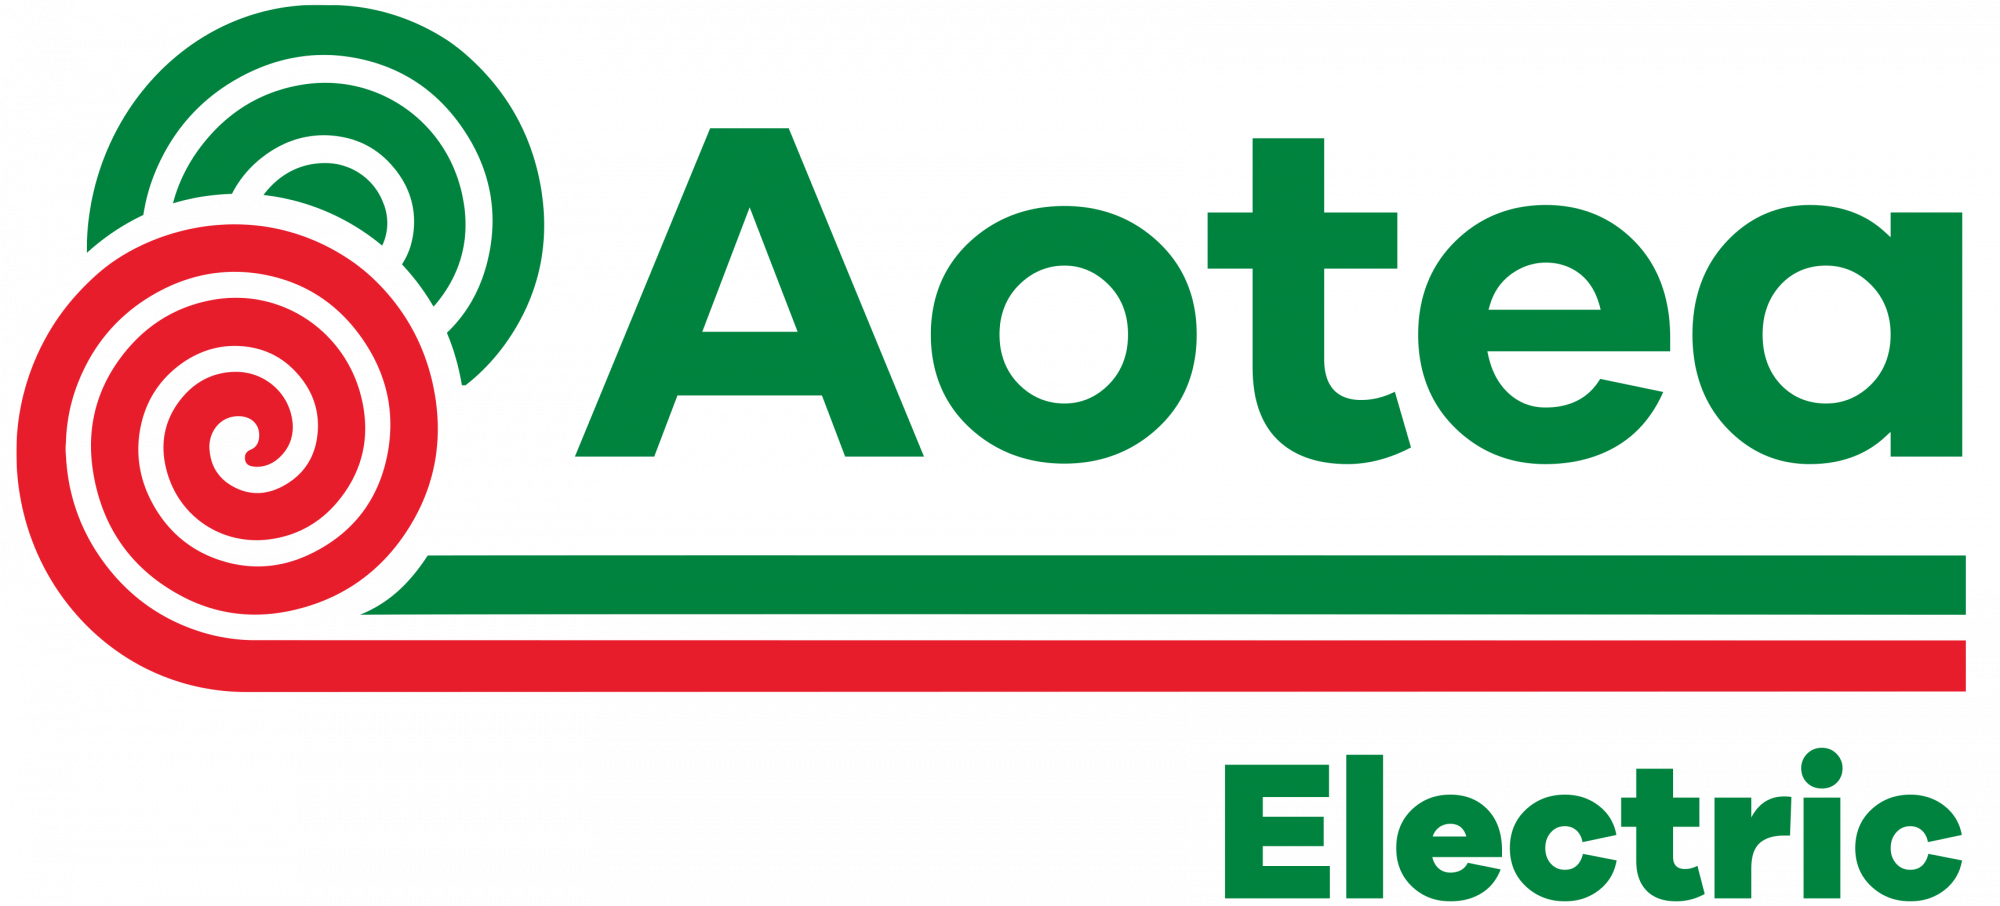 Aotea_Electric_Full_Colour_Logo.png